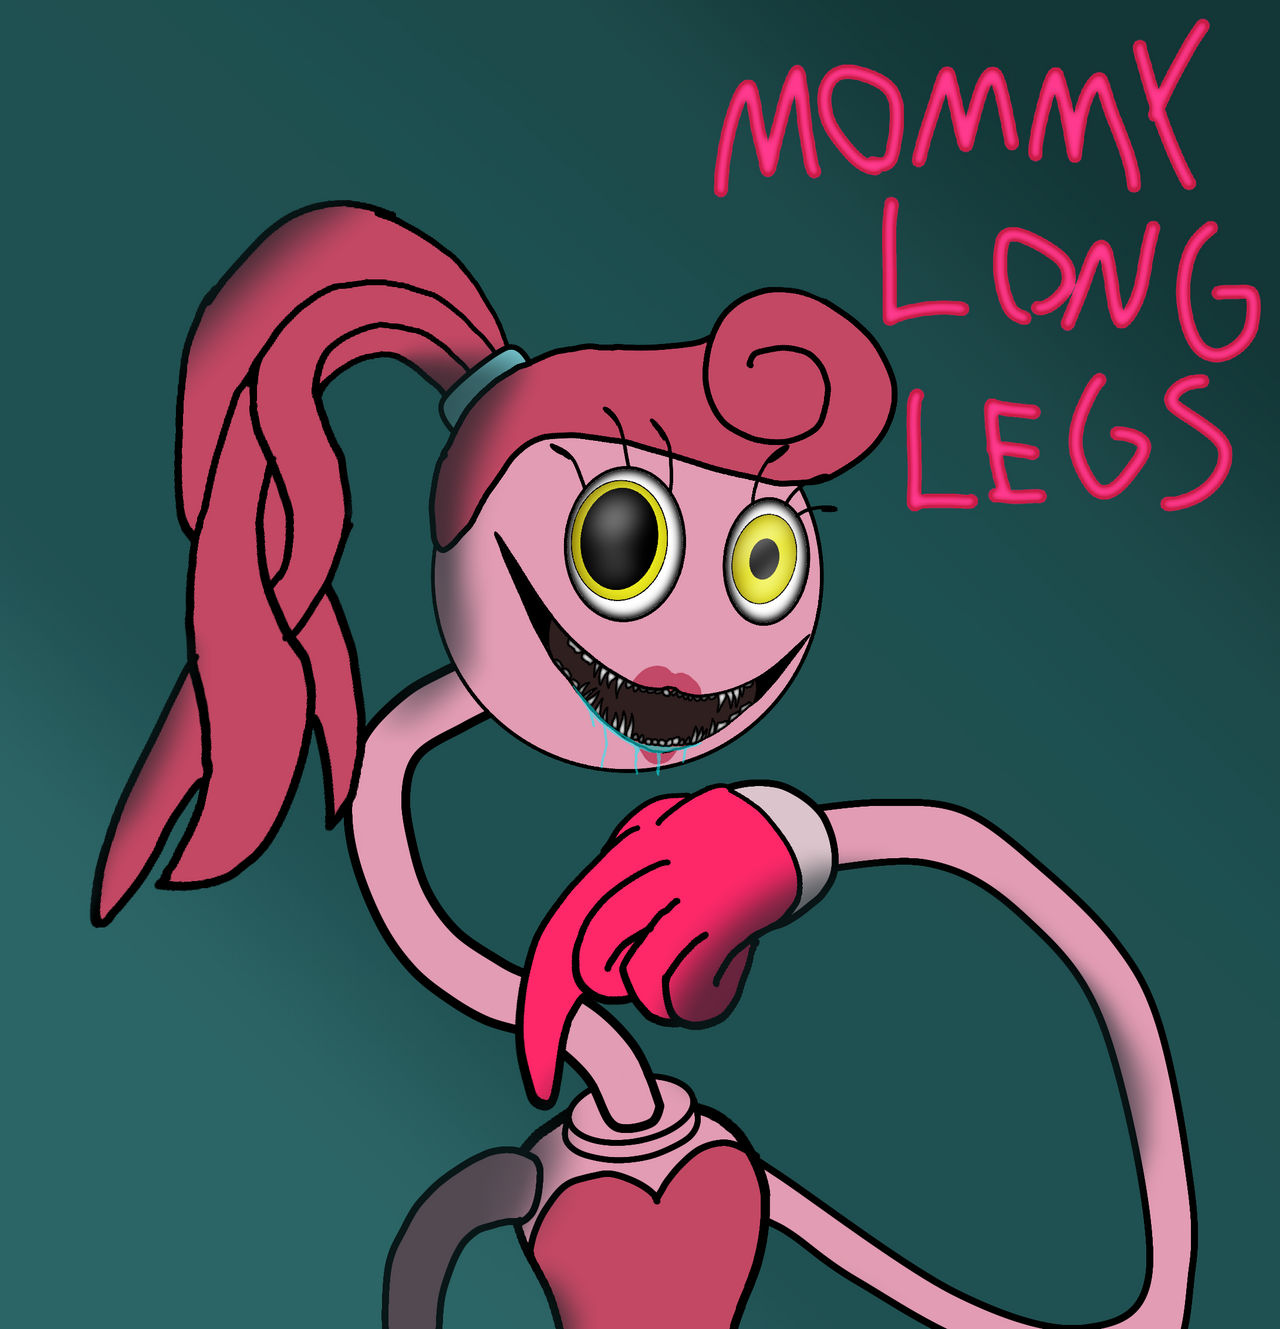 Mommy Long Legs (Poppy Playtime) by PedrinhoPeco on DeviantArt